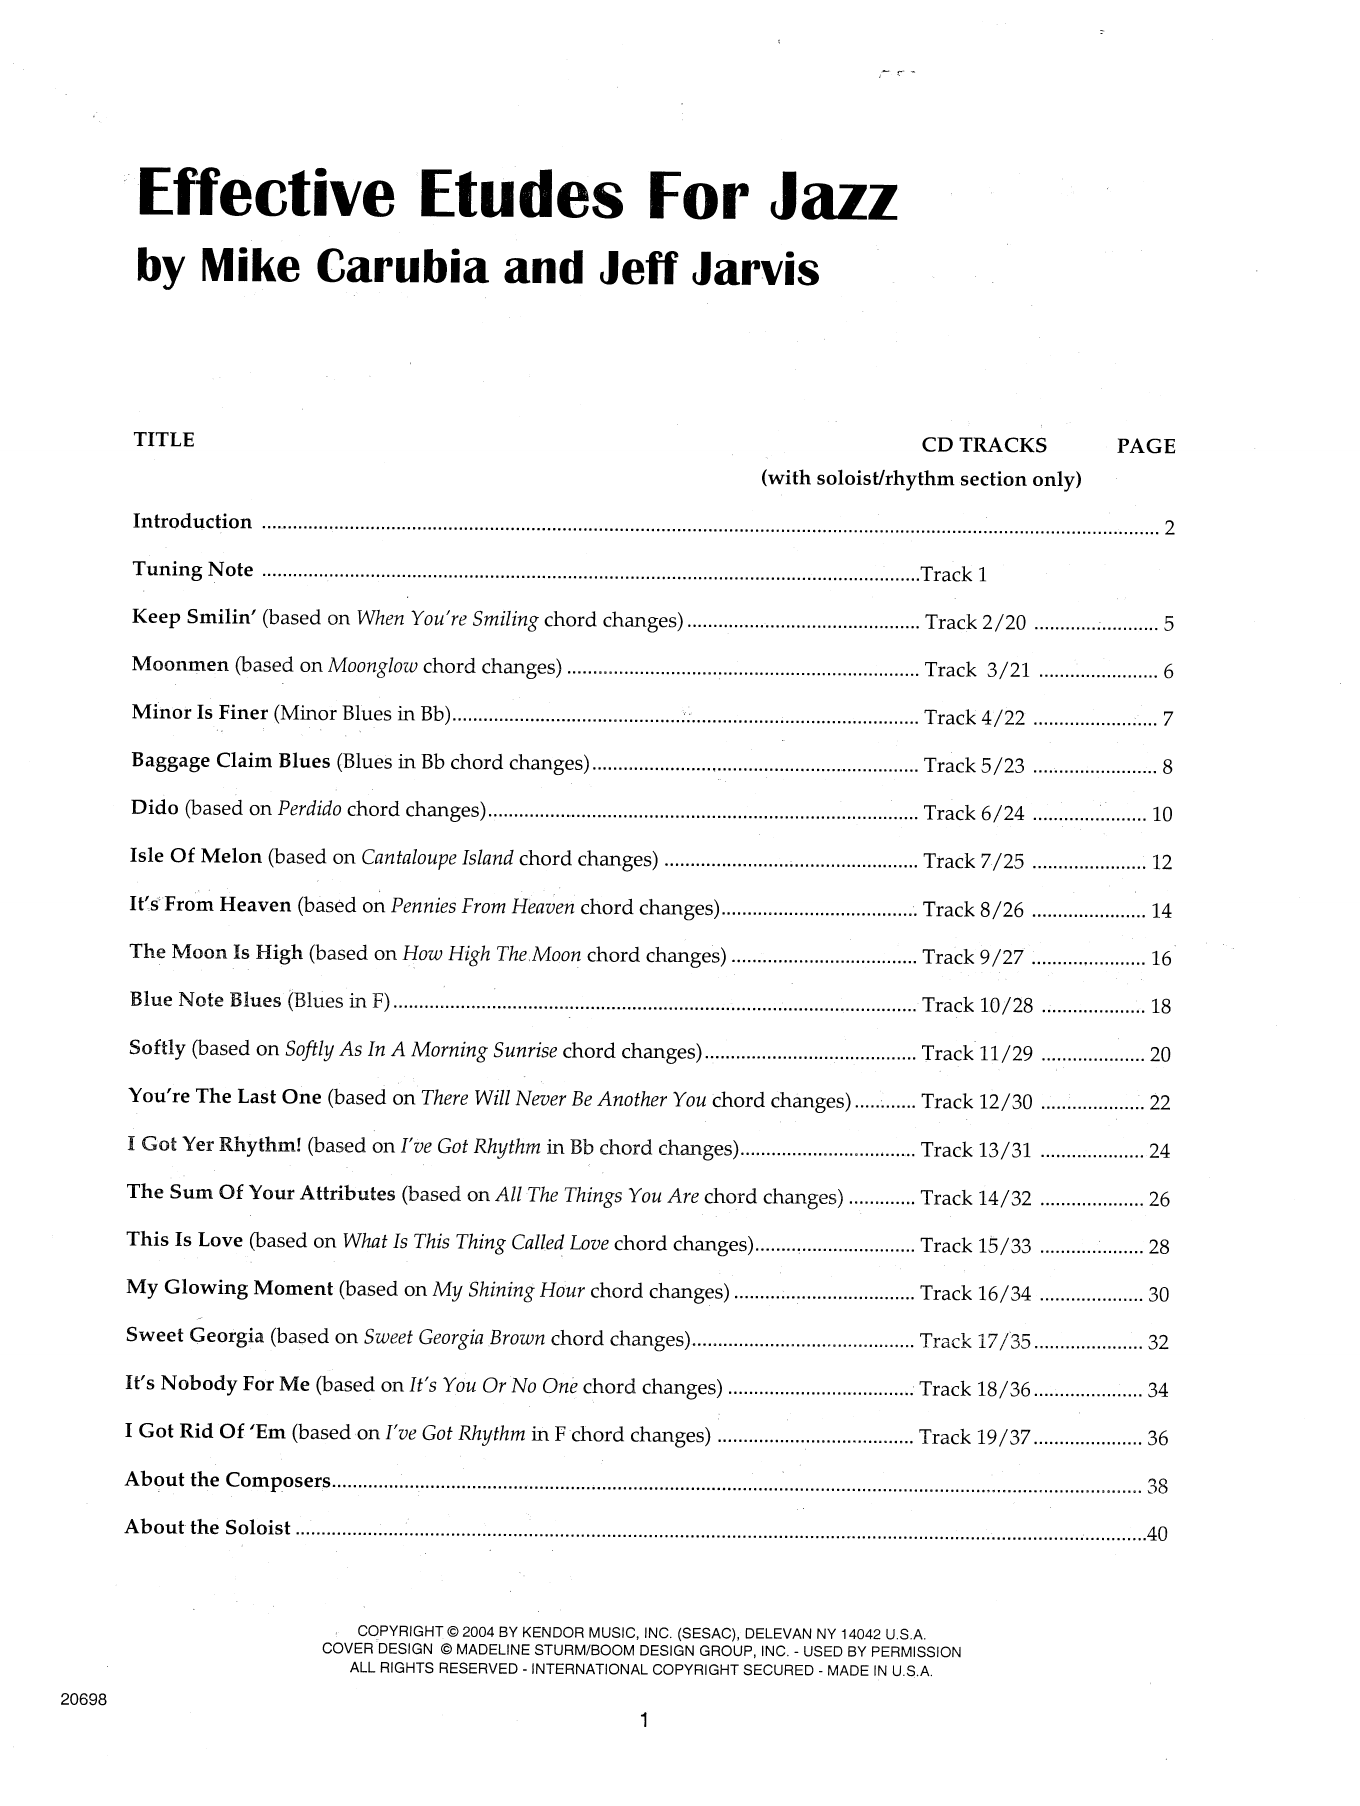 Download Jeff Jarvis Effective Etudes For Jazz - Guitar Sheet Music